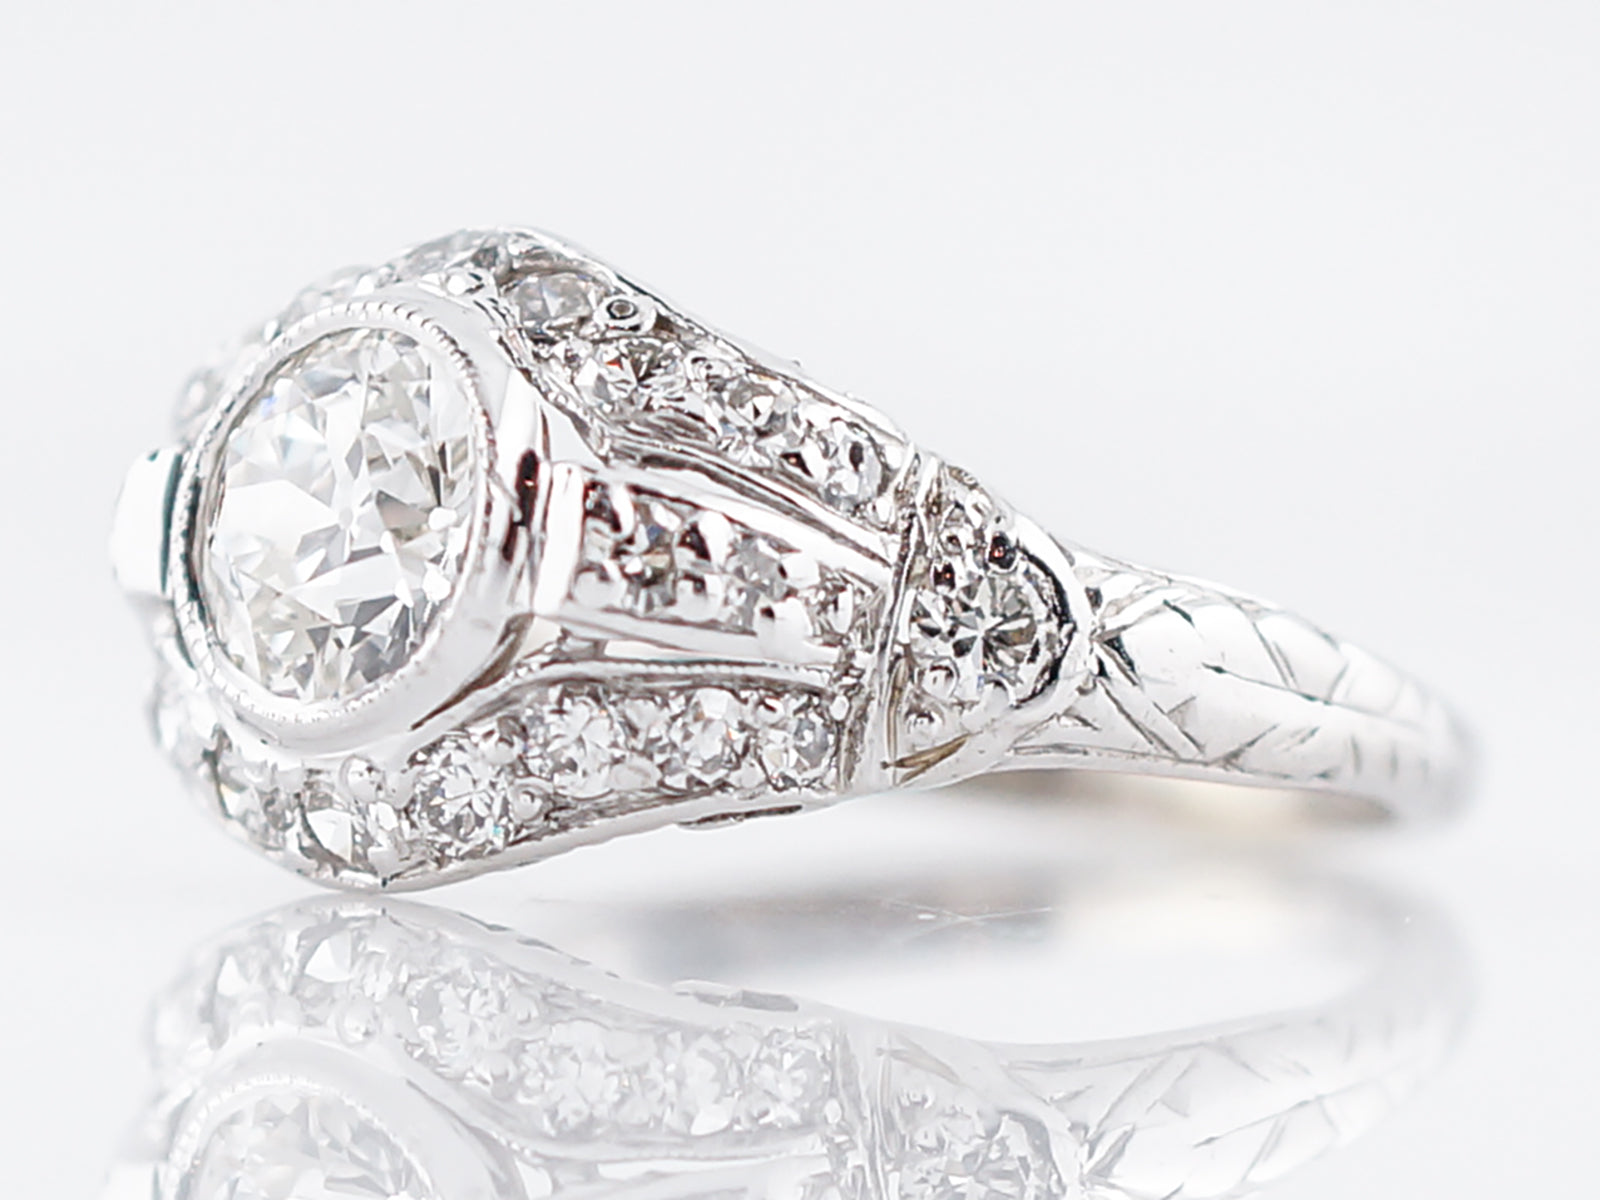 Antique Engagement Ring Art Deco .72 Old European Cut Diamond in 18k White Gold